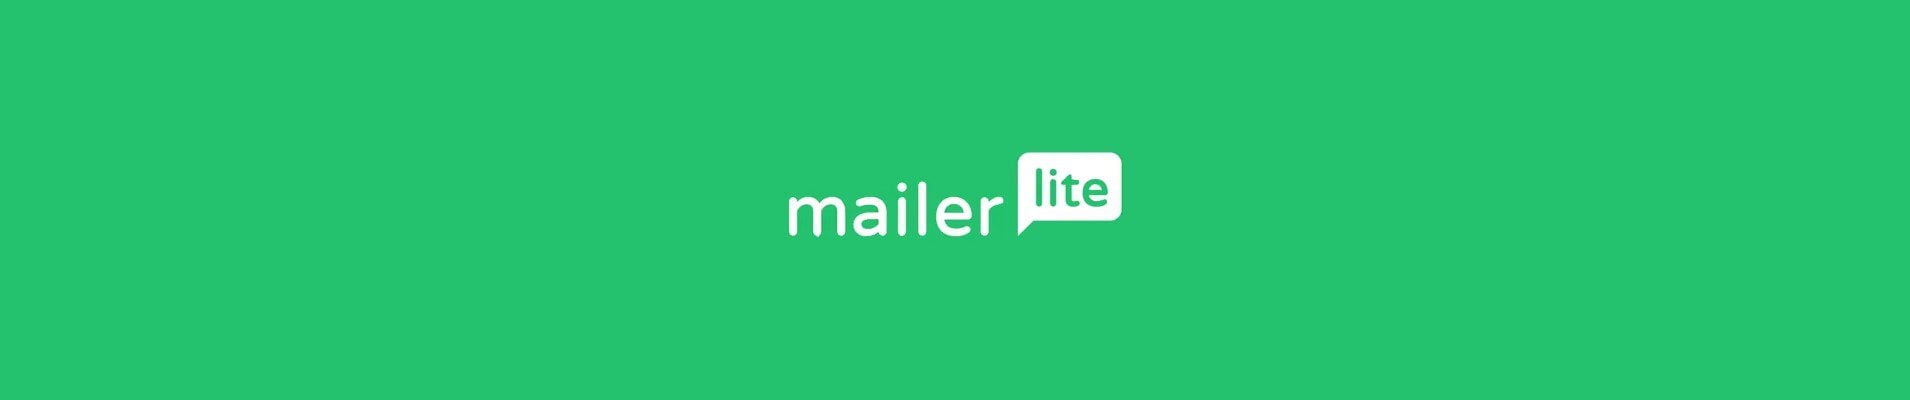 Marchio del logo MailerLite